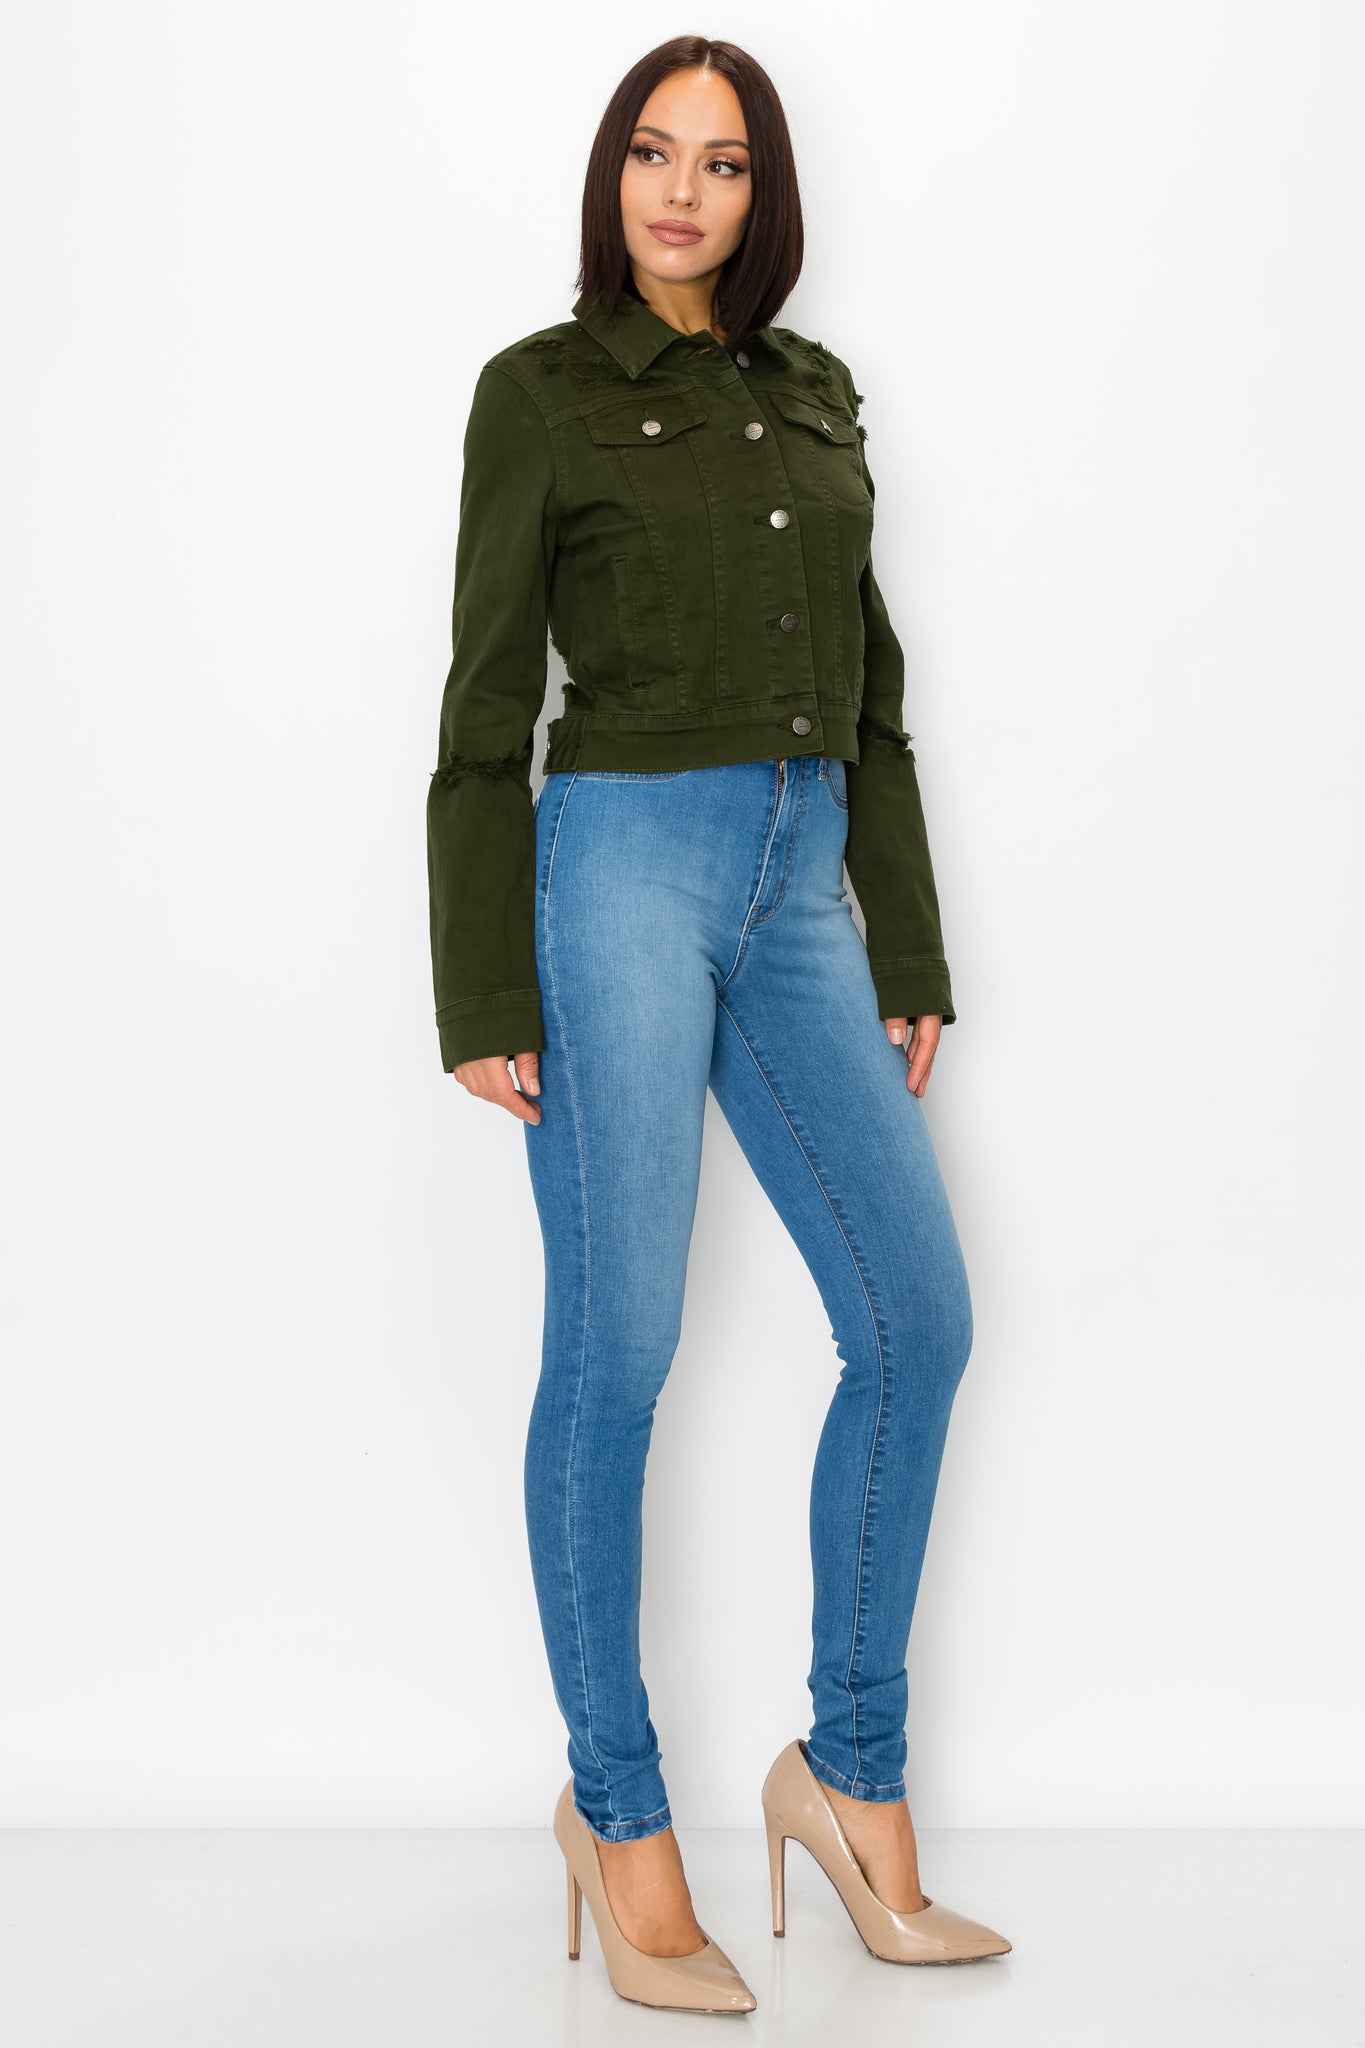 Weekday Women's Medium Drawstring Denim Jacket Khaki Green Short Pockets |  eBay